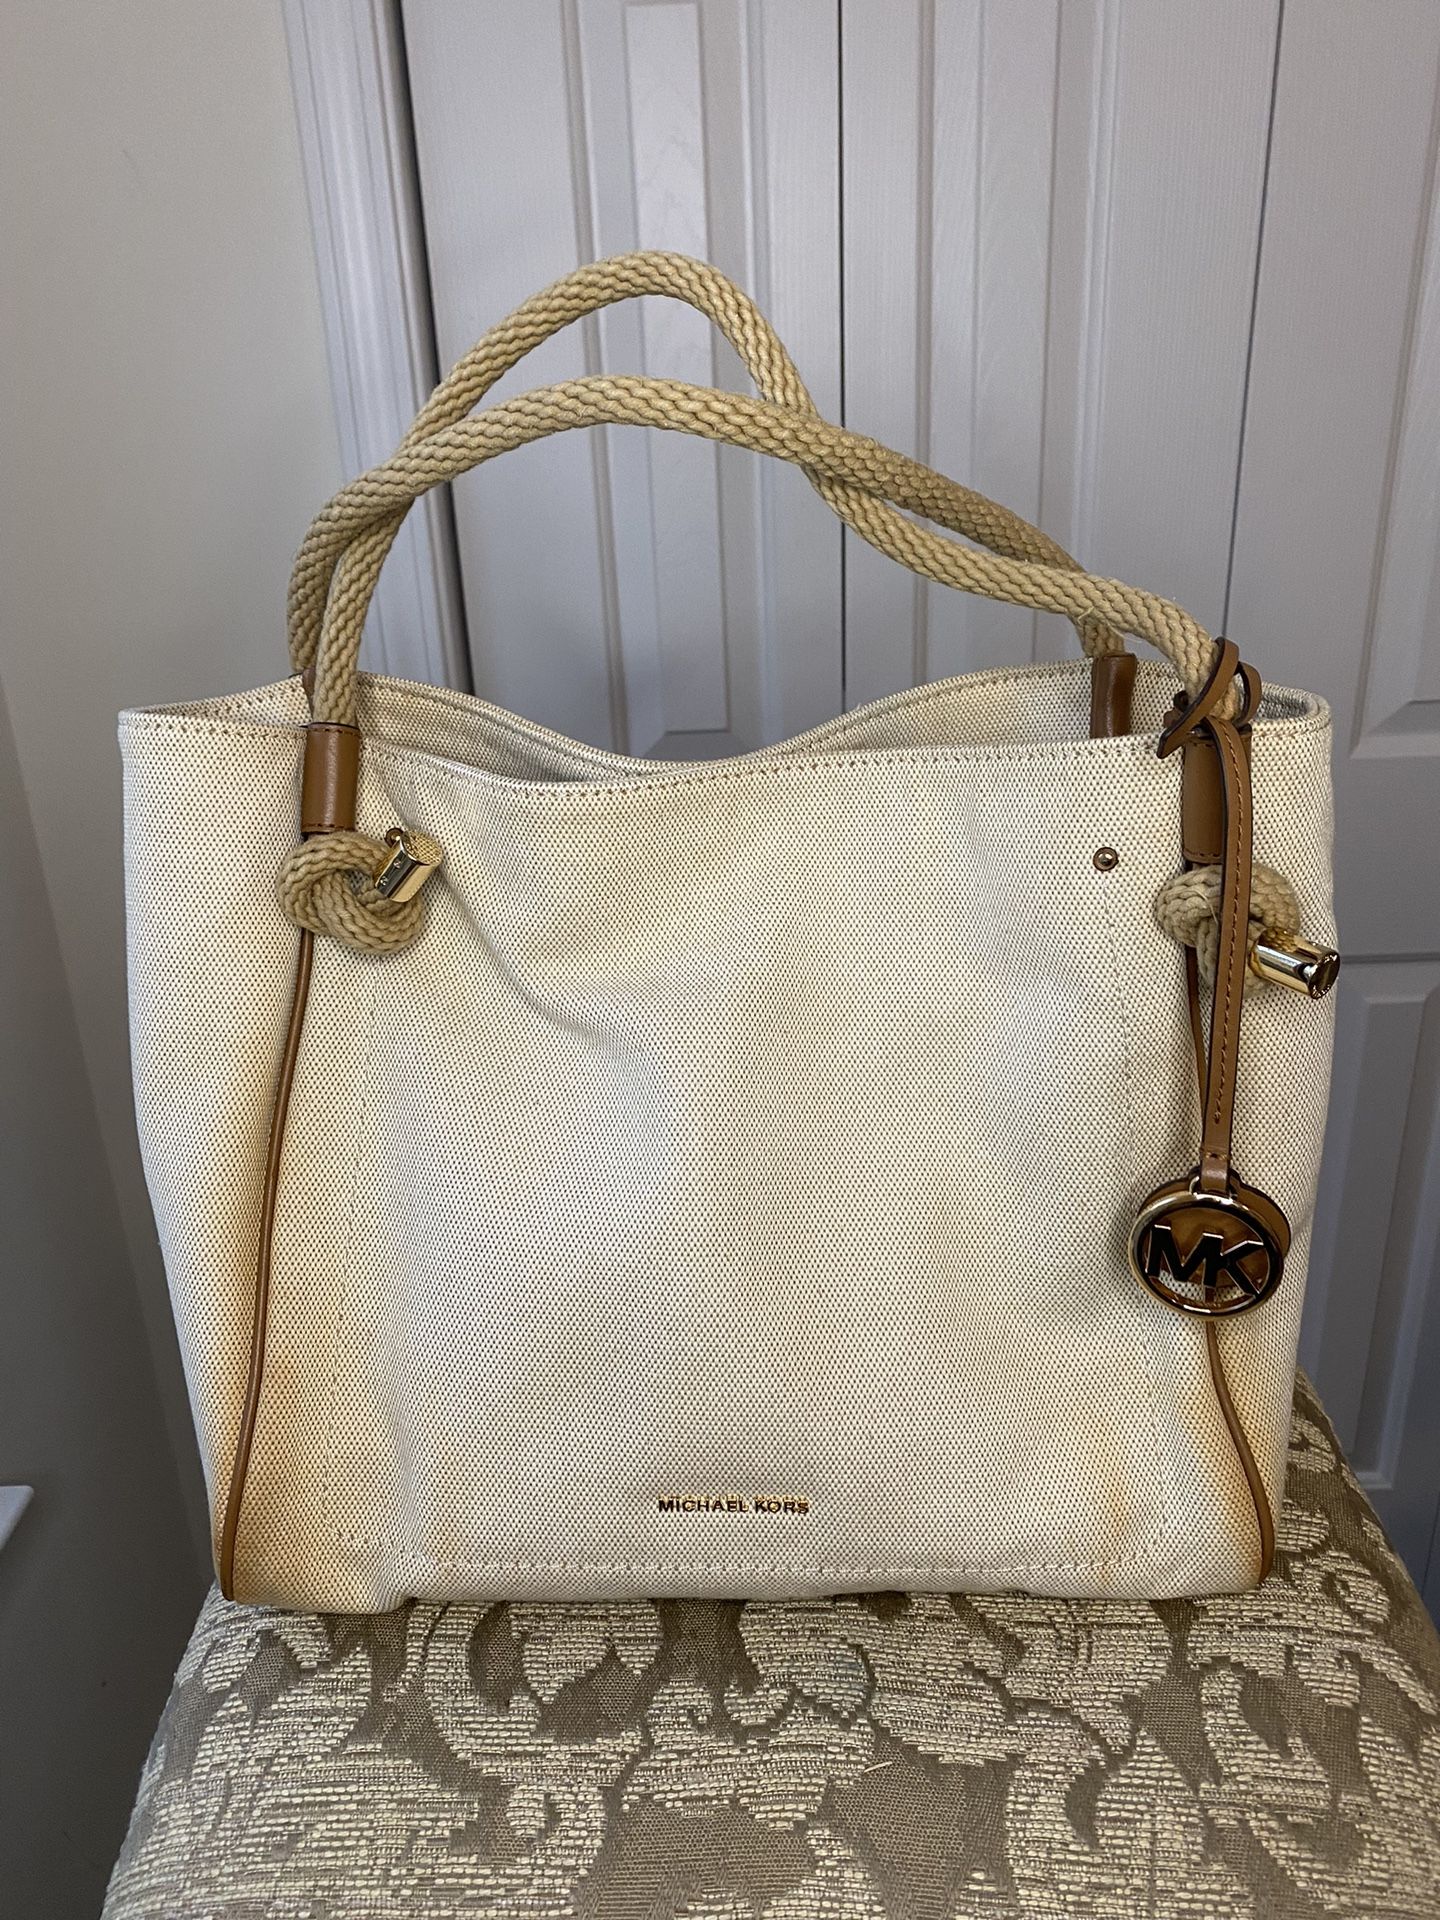 Michael Kors Isla Large Tote Handbag for Sale in Columbia, SC - OfferUp